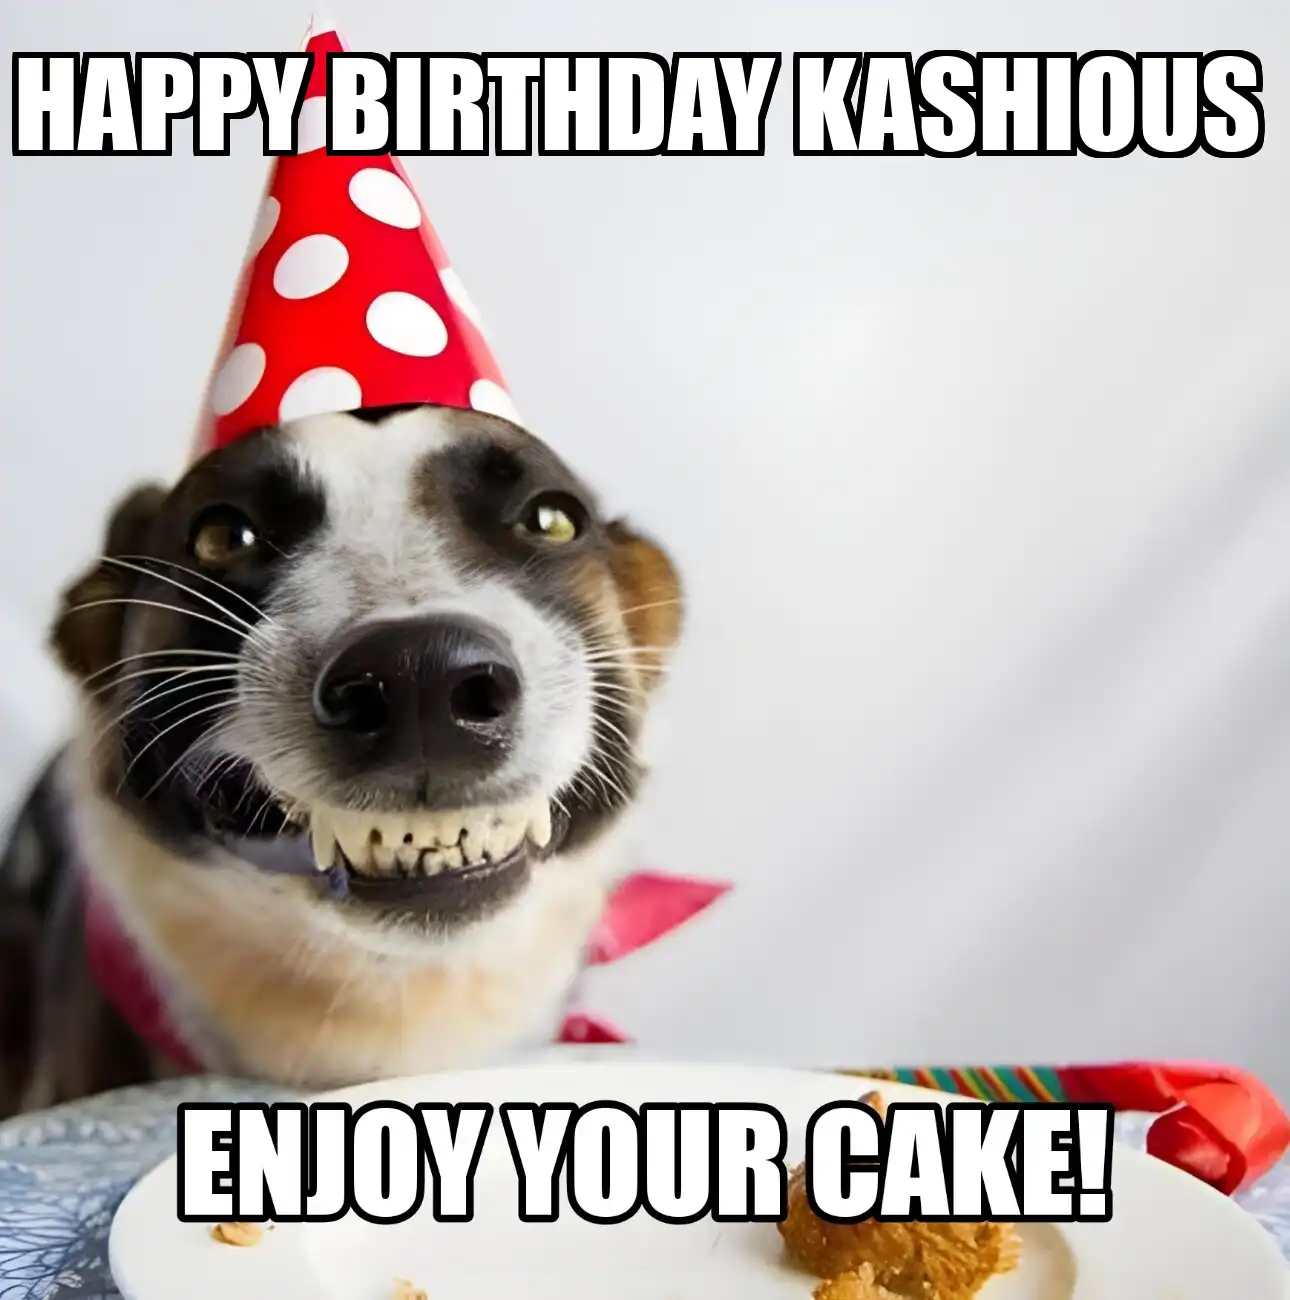 Happy Birthday Kashious Enjoy Your Cake Dog Meme